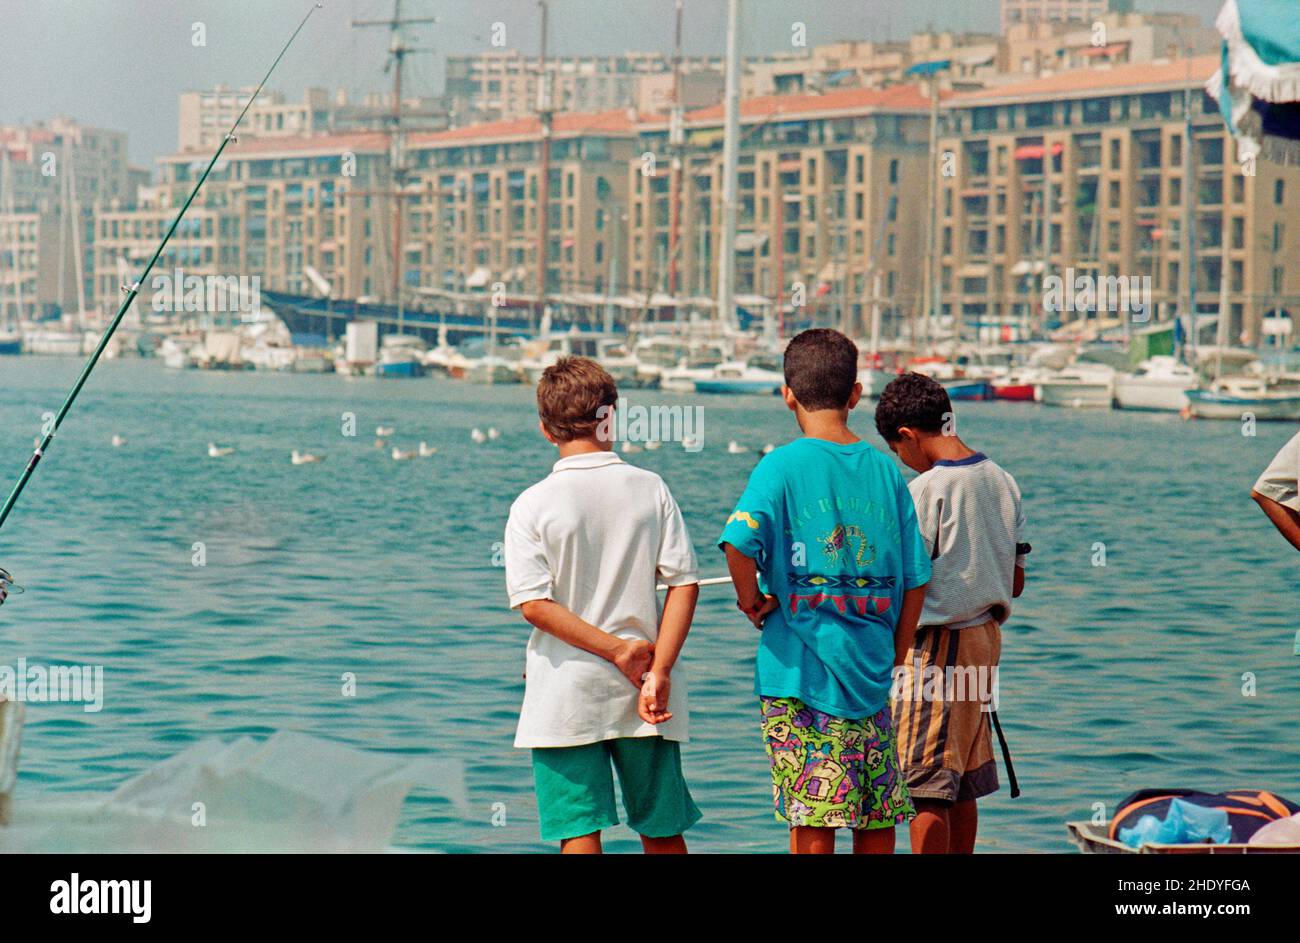 Boys fishing, Old Harbour, Marsiglia, 28 agosto 1991, Dipartimento Bouches-du-Rhône, regione Provence-Alpes-Côte d'Azur, Francia Foto Stock